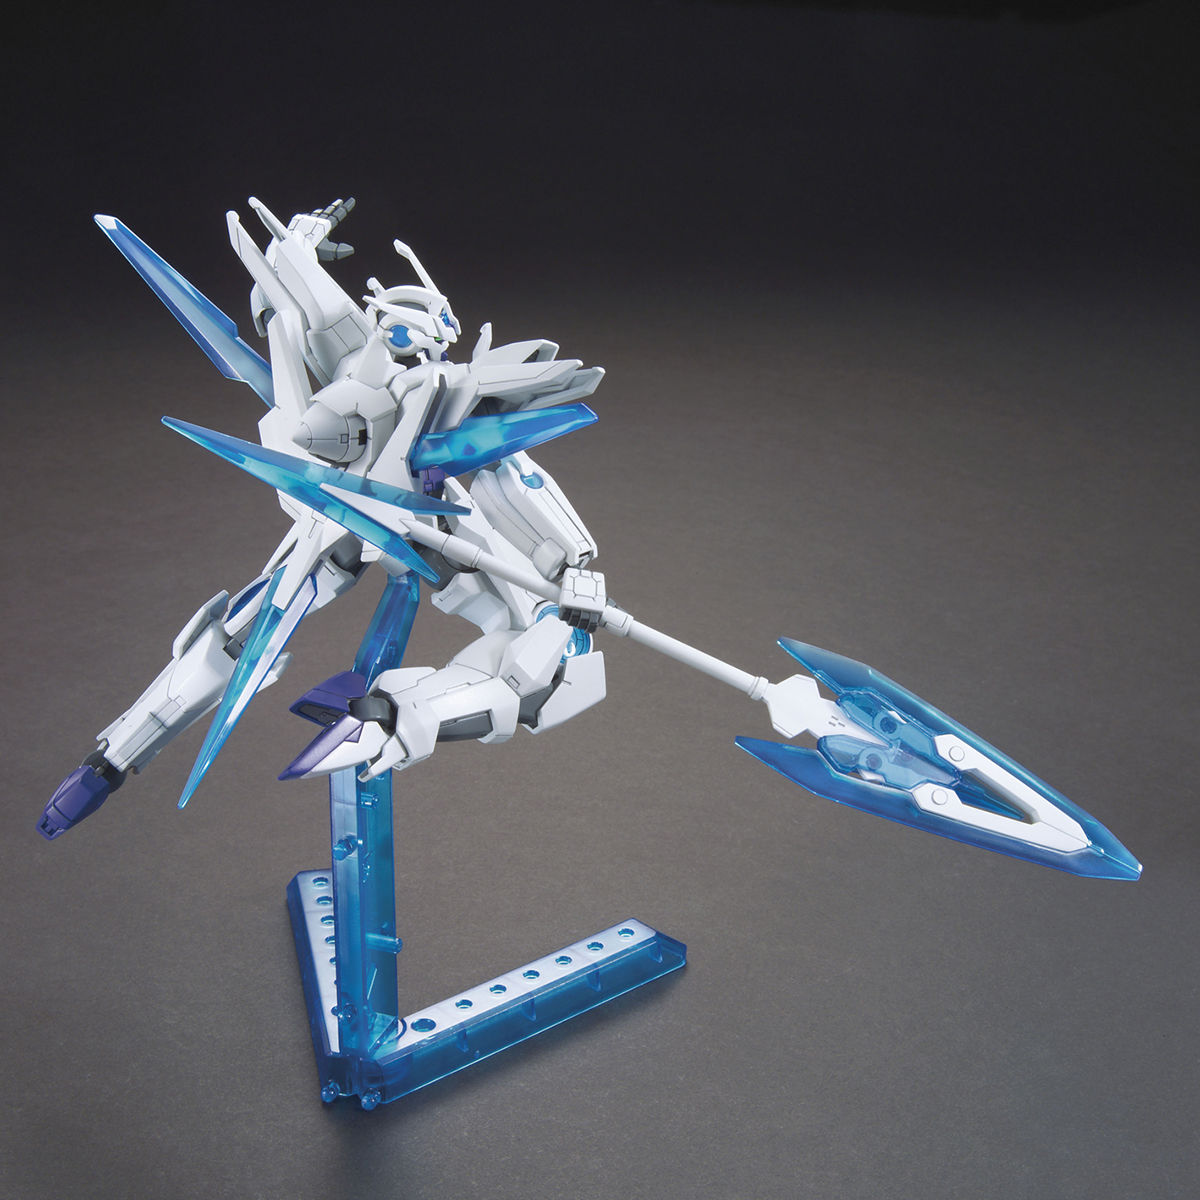 HGBF 1/144 Transient Gundam